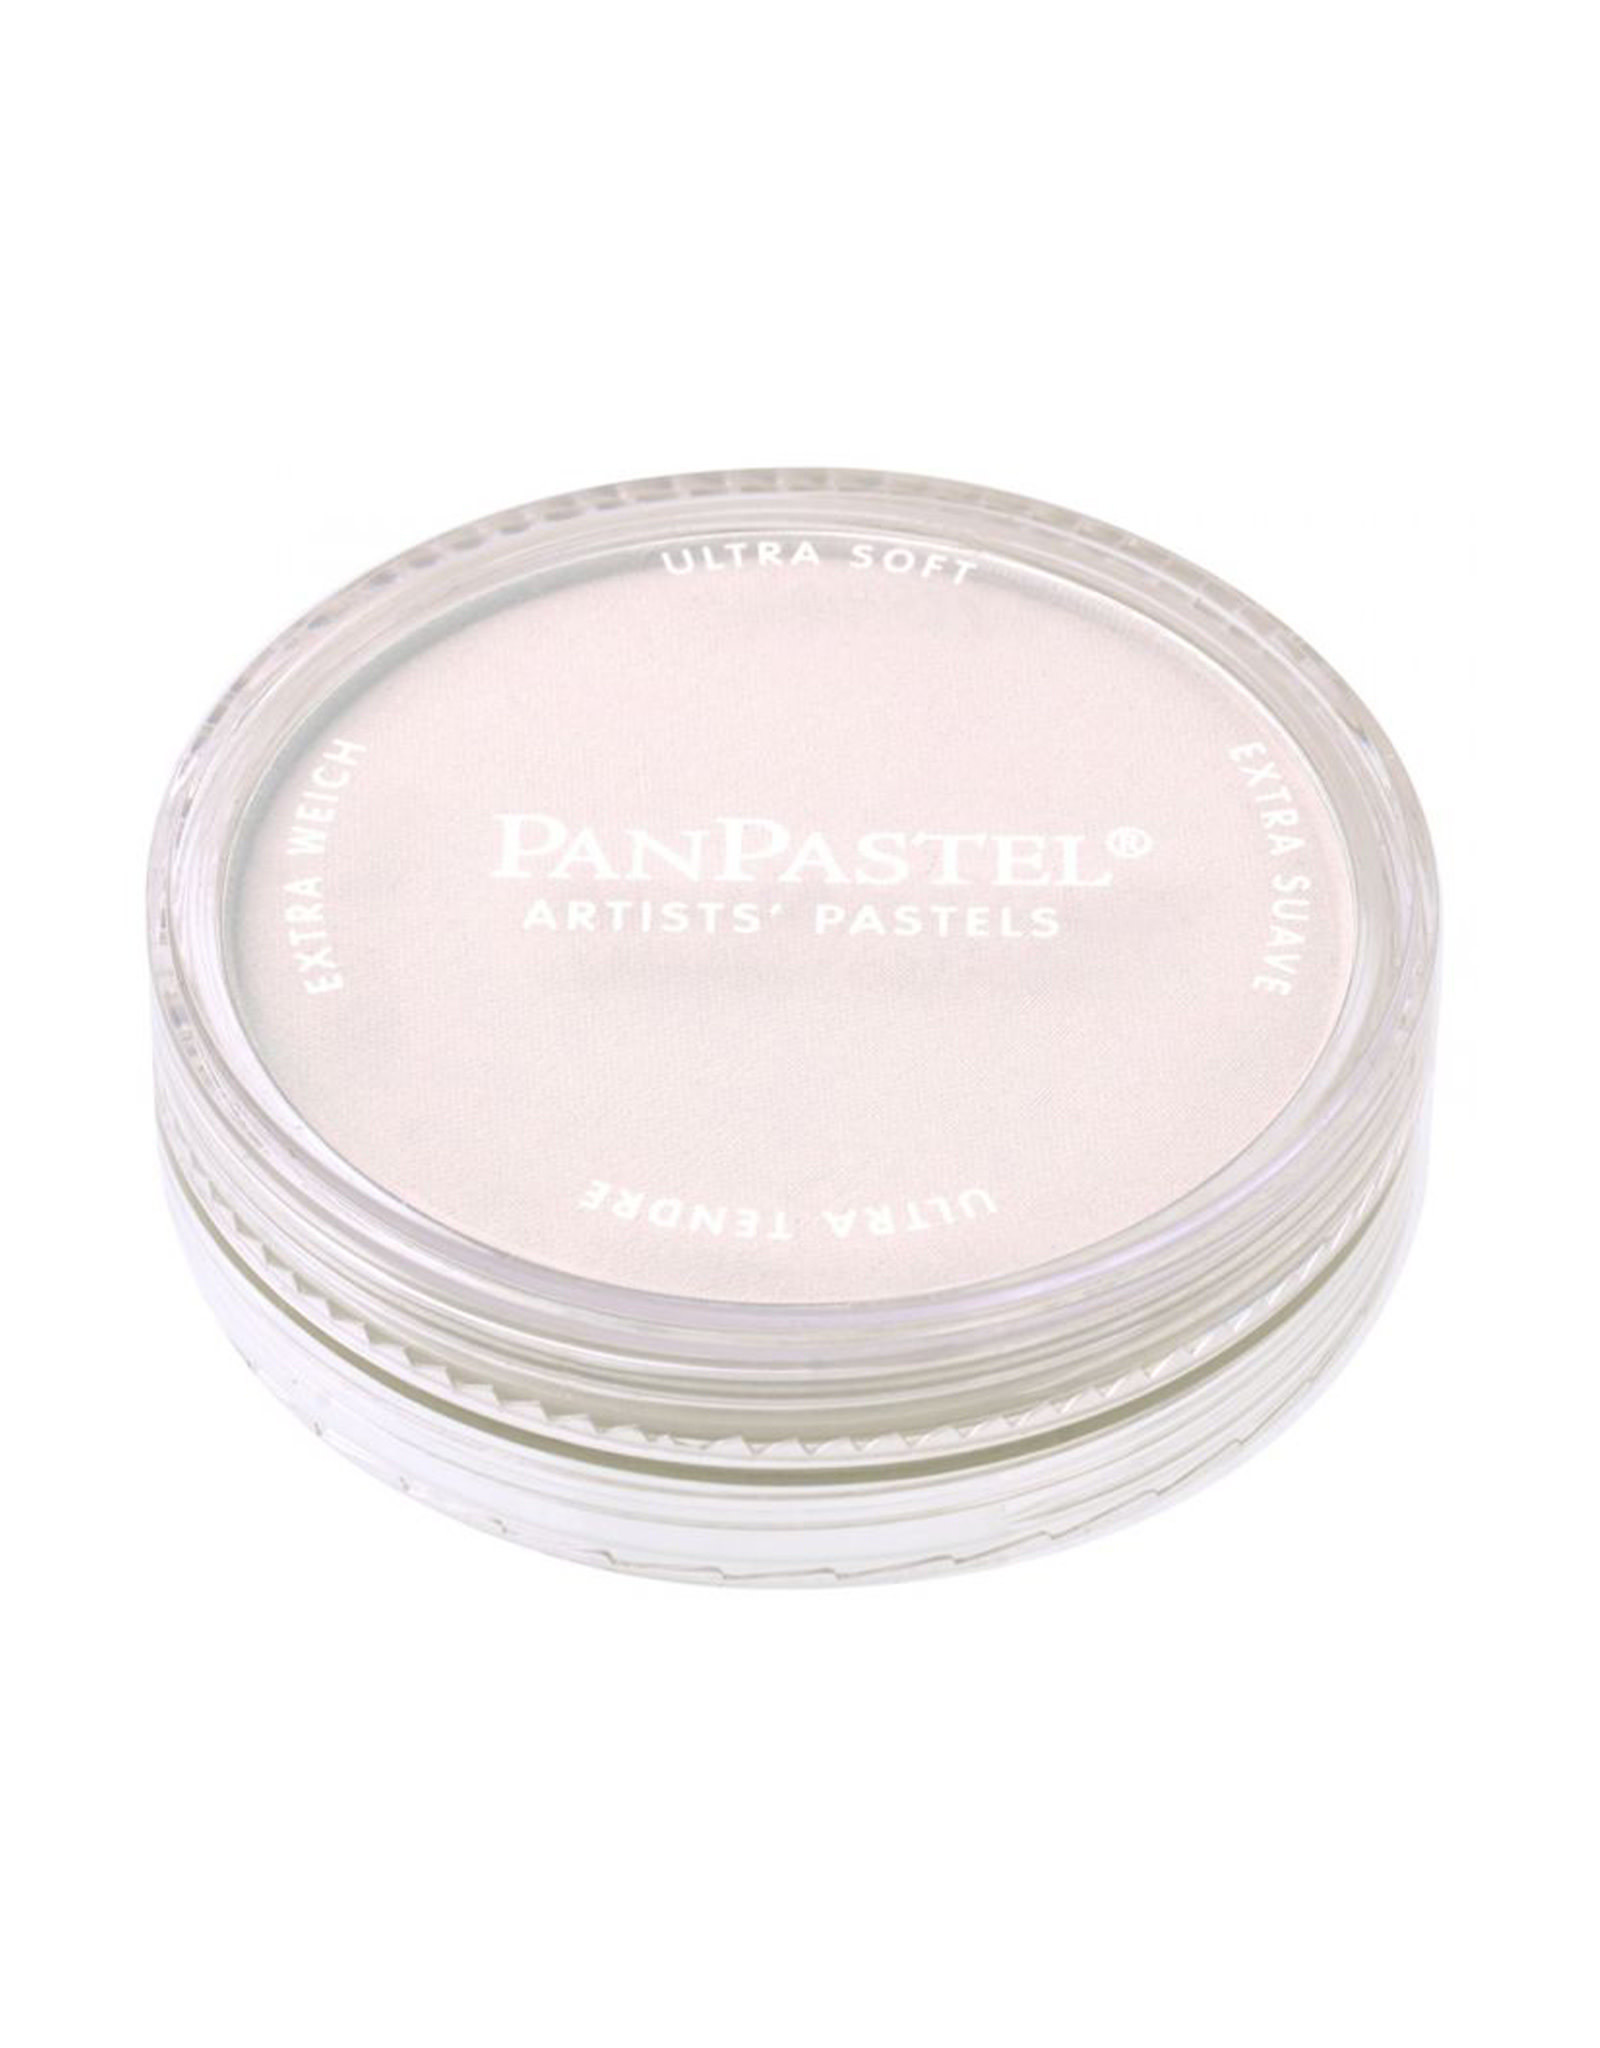 Panpastel PanPastel Colours, Paynes Grey Warm Tint